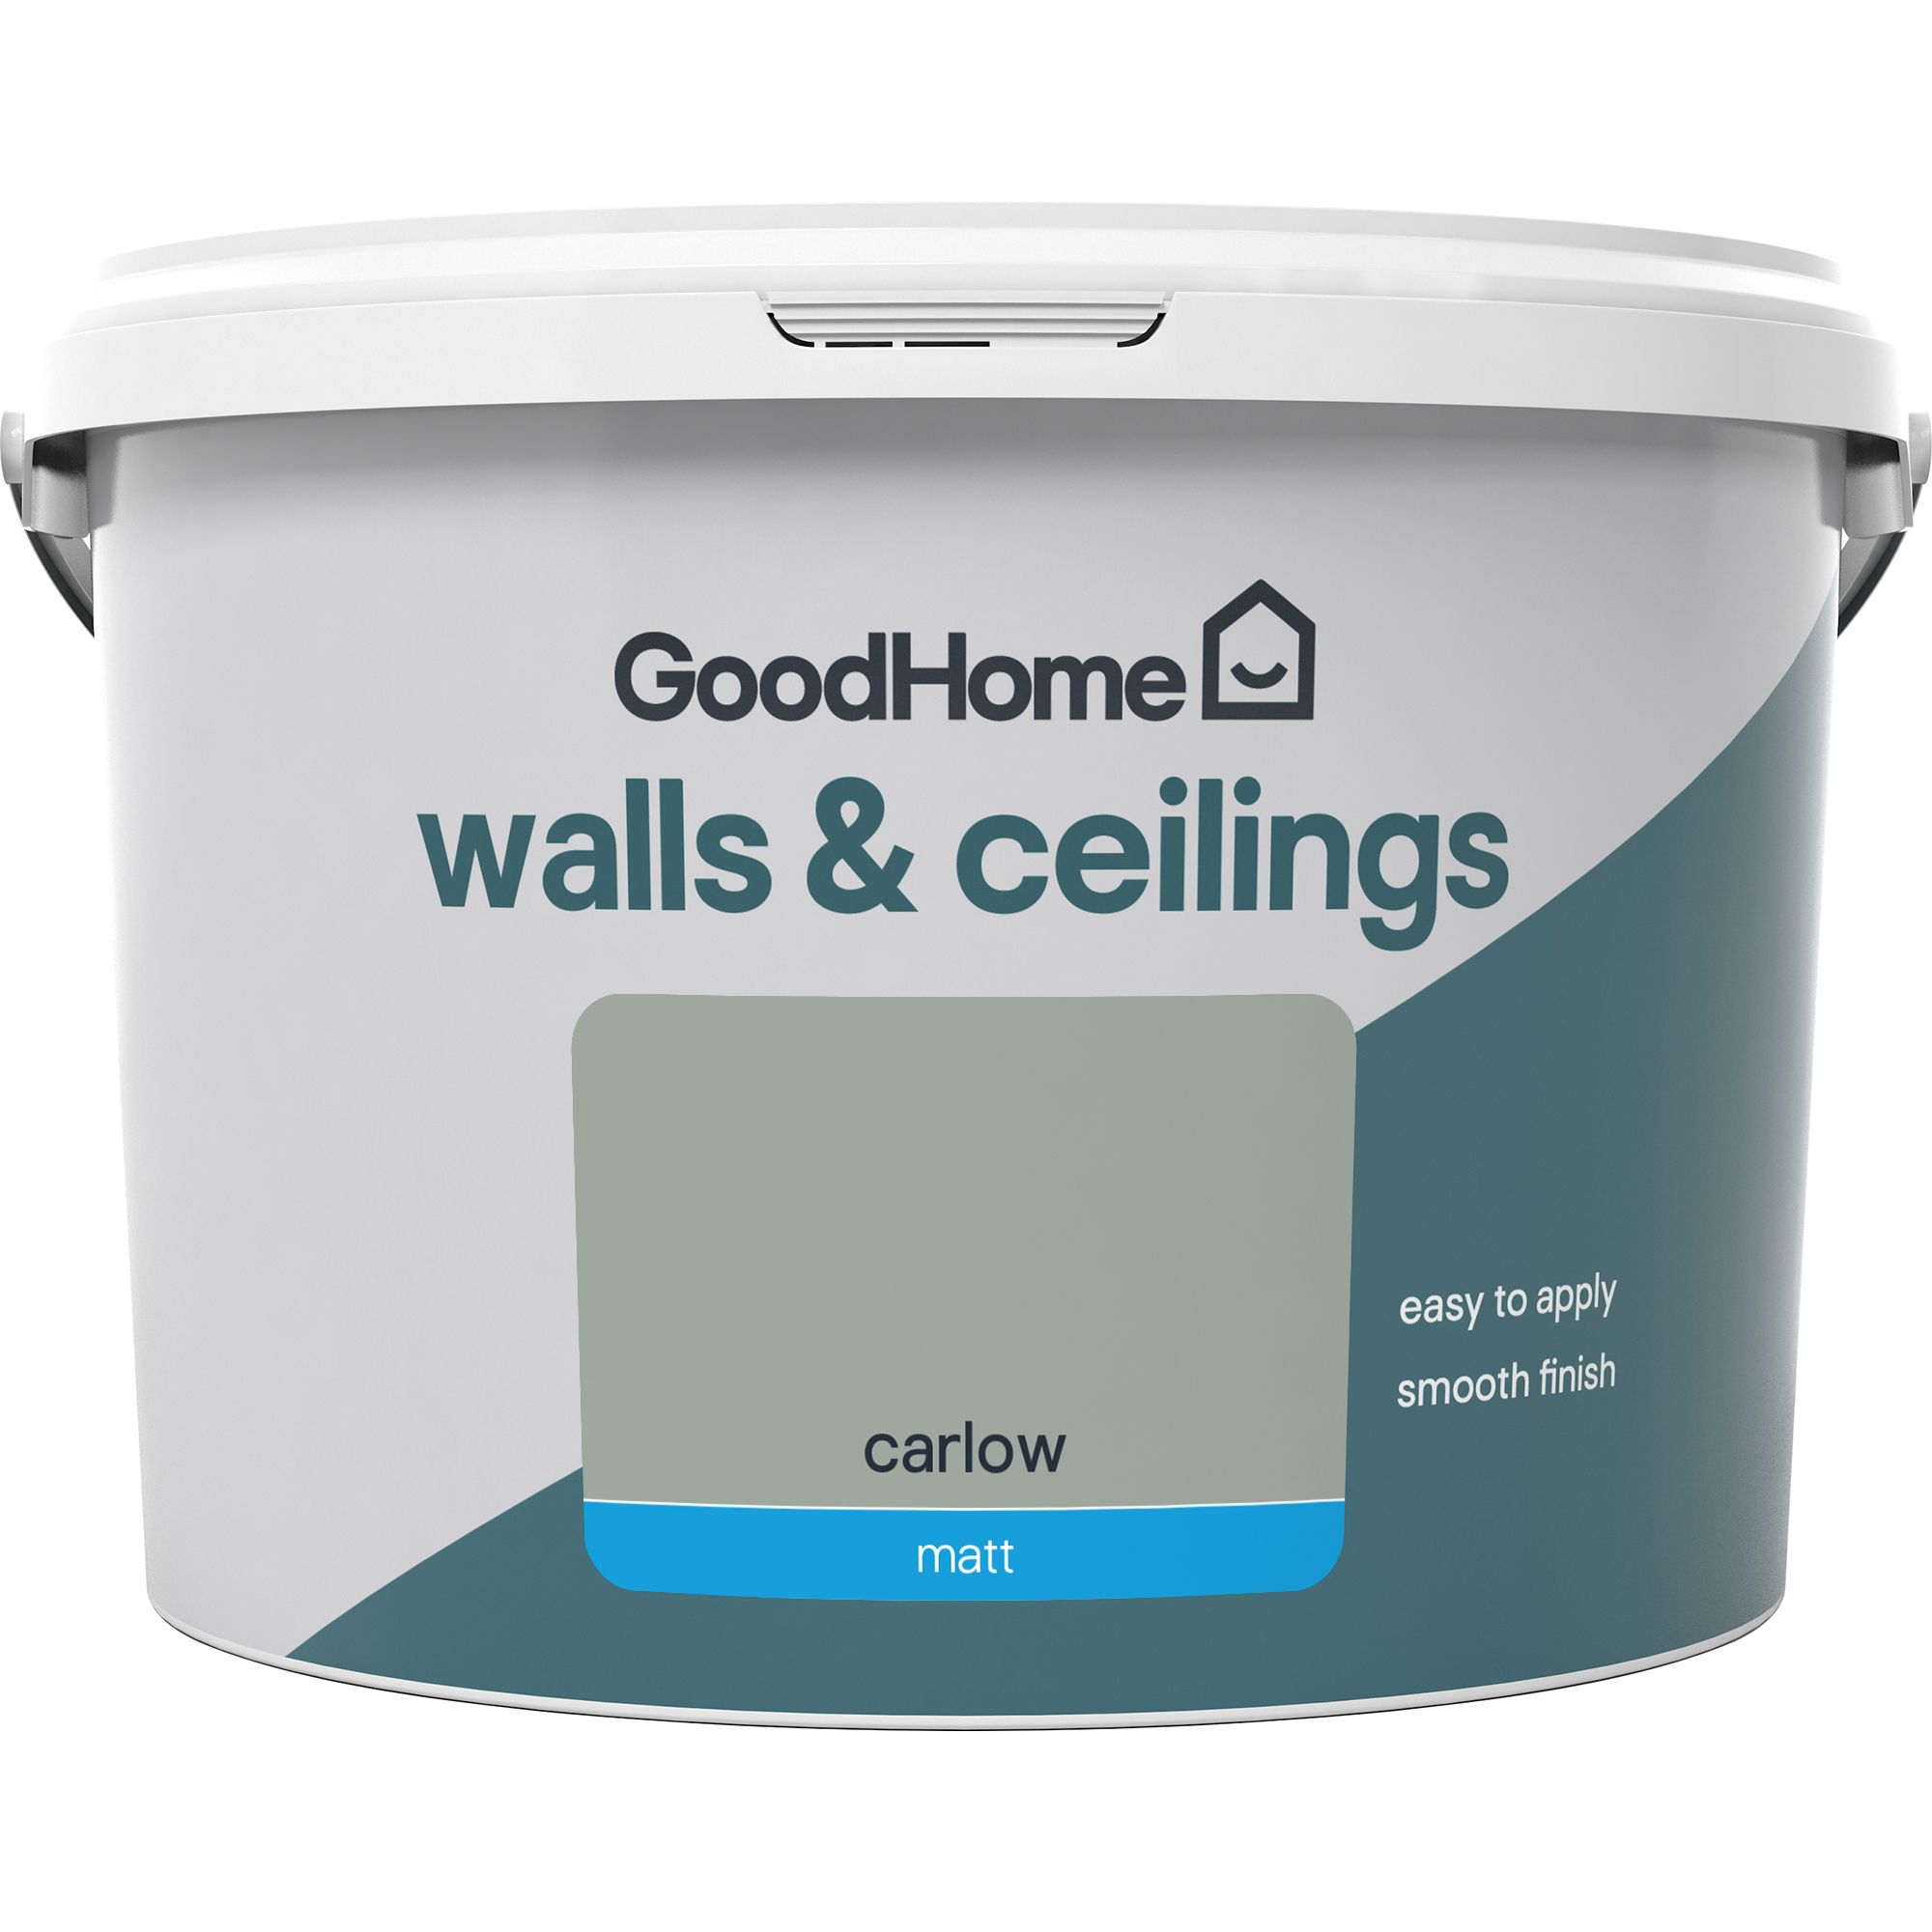 GoodHome Walls & ceilings Carlow Matt Emulsion paint, 2.5L